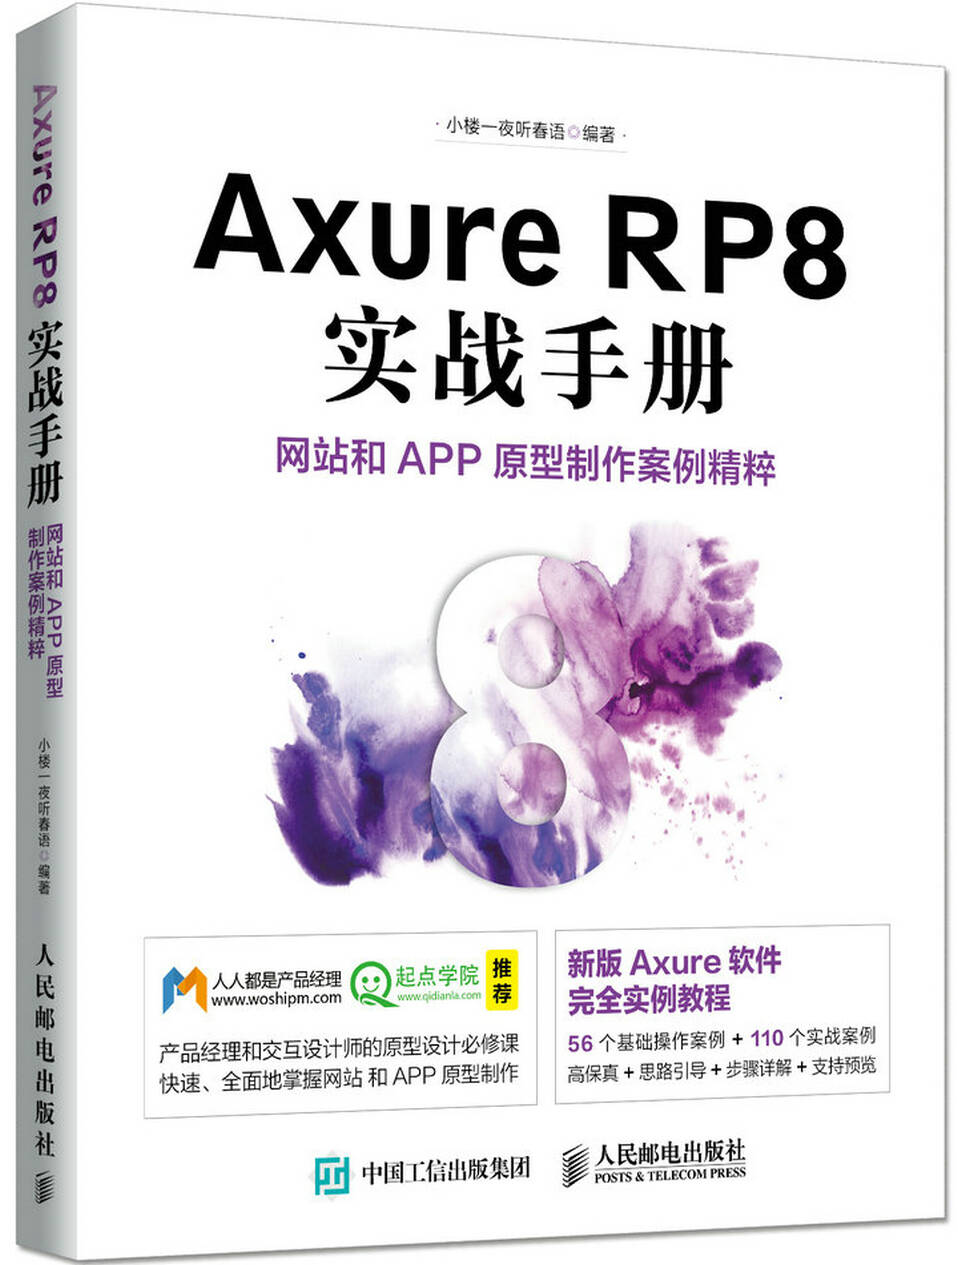 Axure RP8 实战手册 网站和APP原型制作案例精粹图片